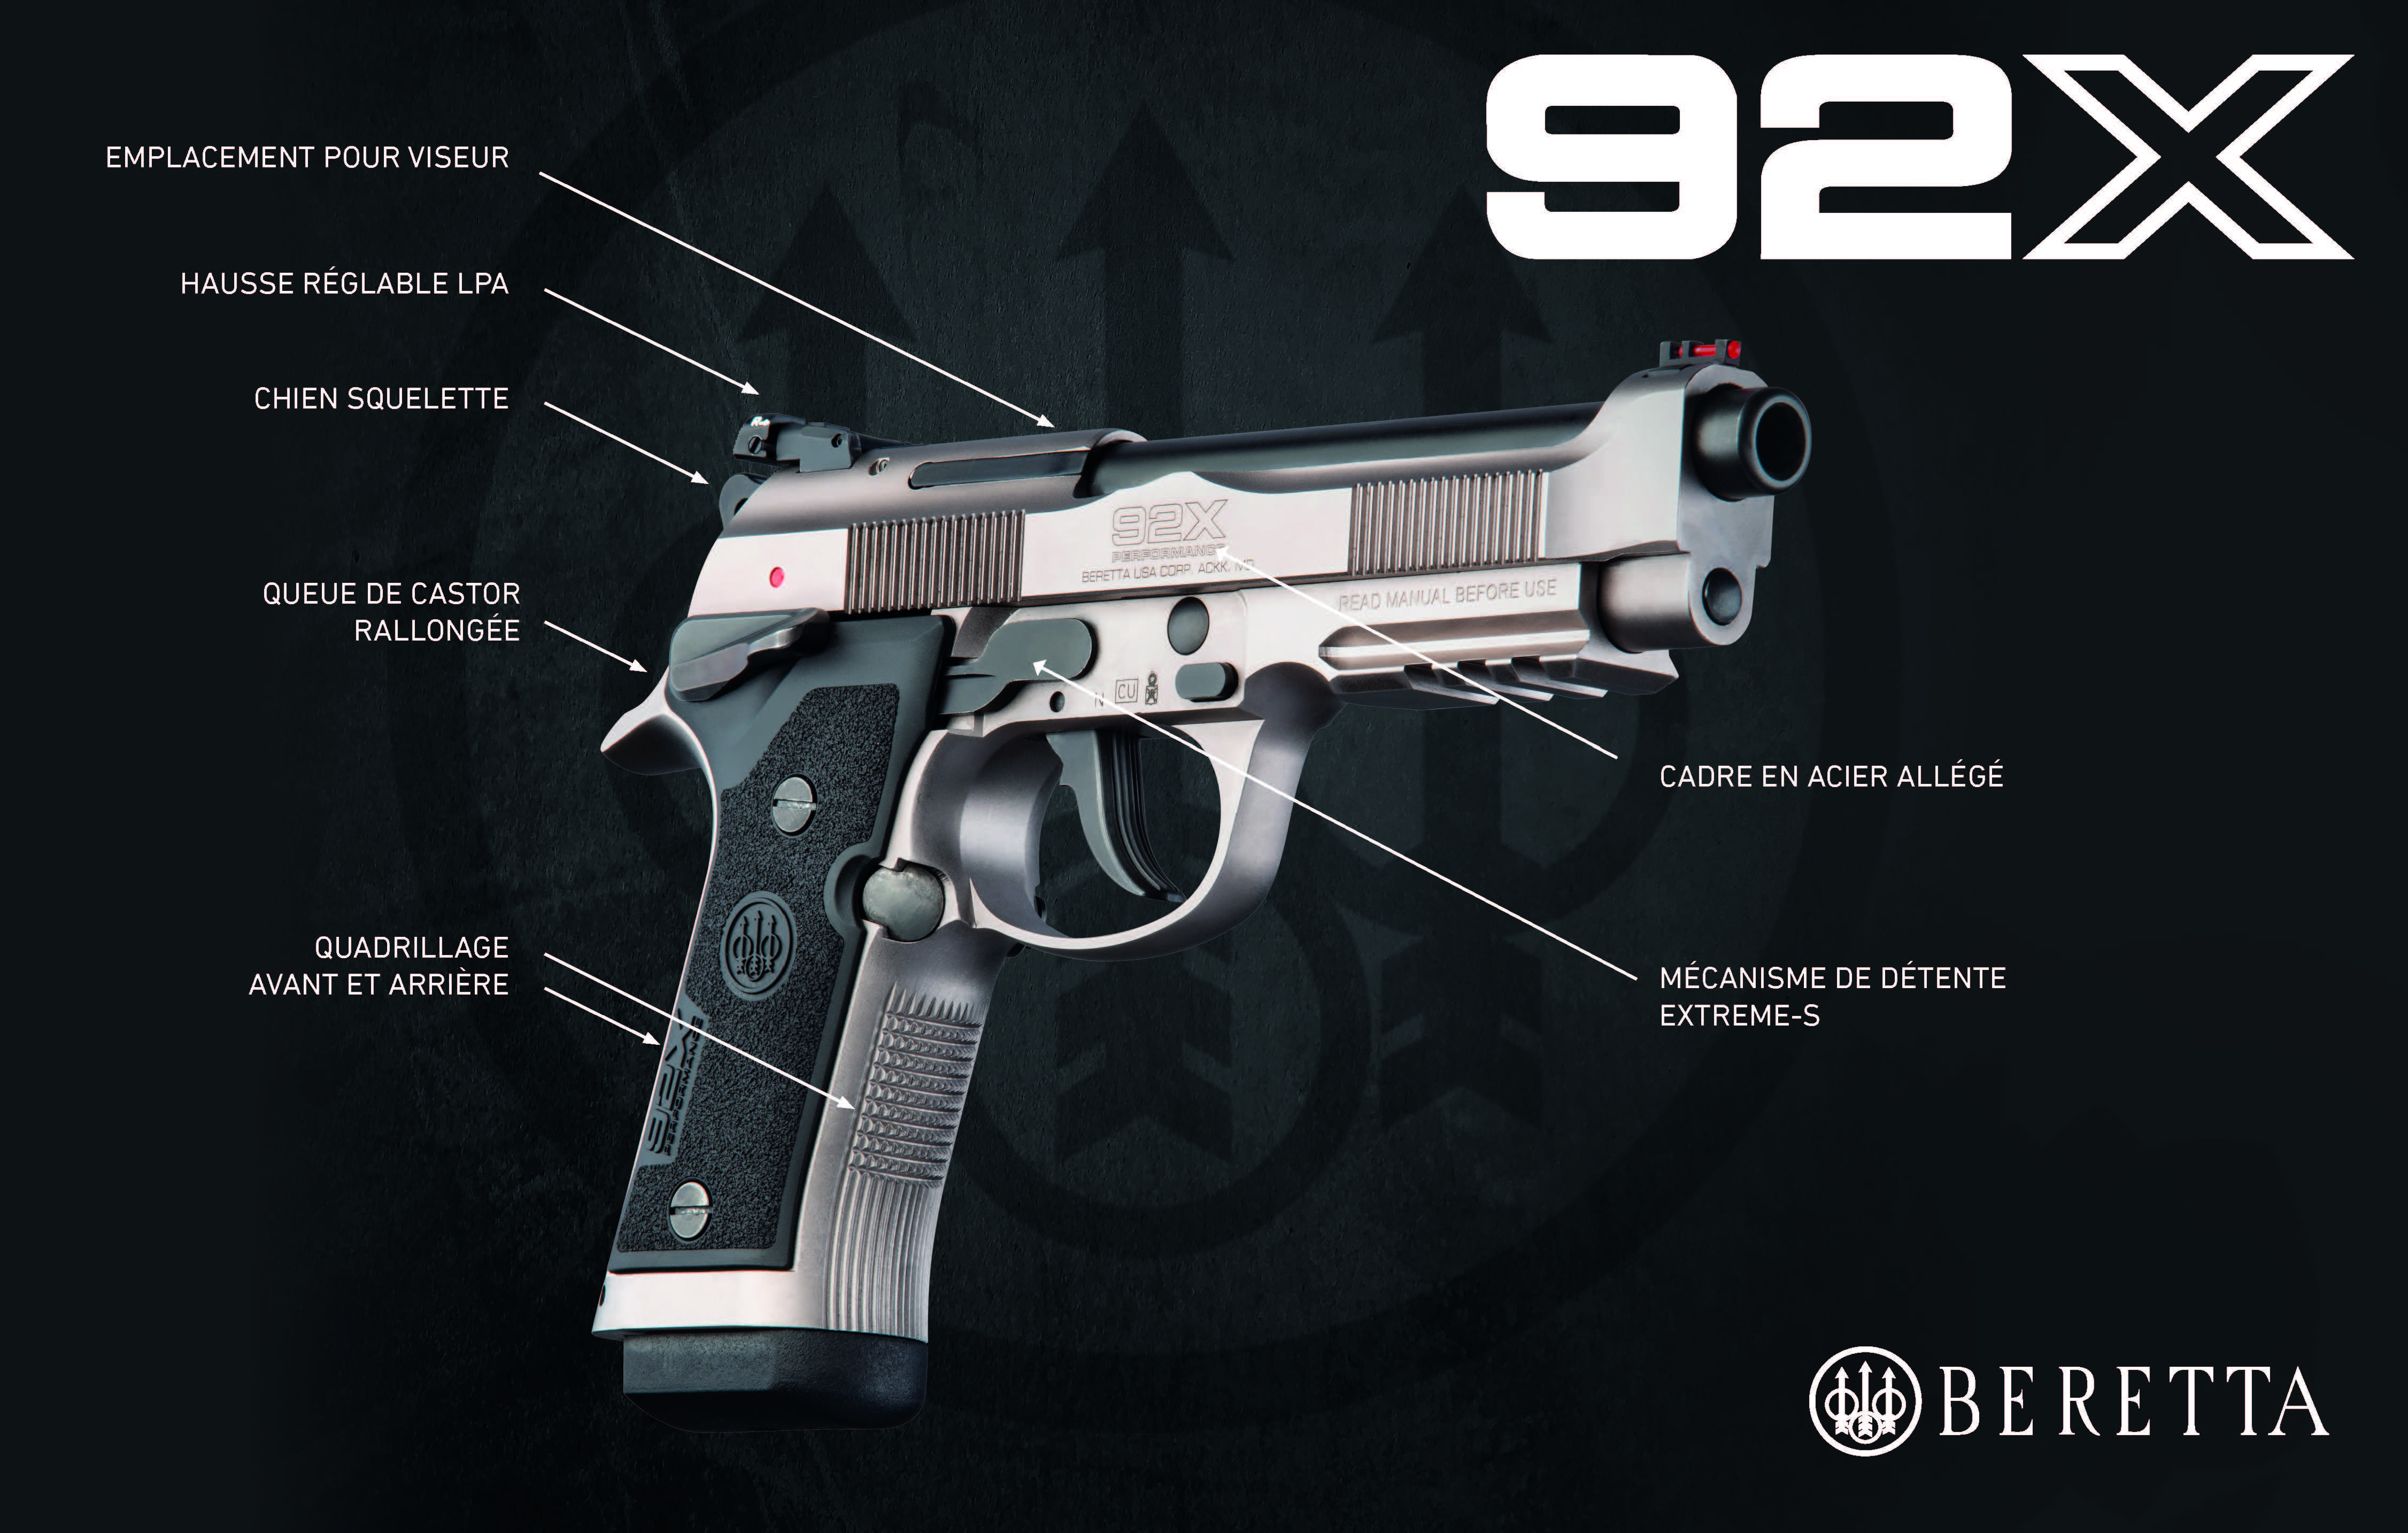 92X pistolet Beretta : schéma de ses atouts